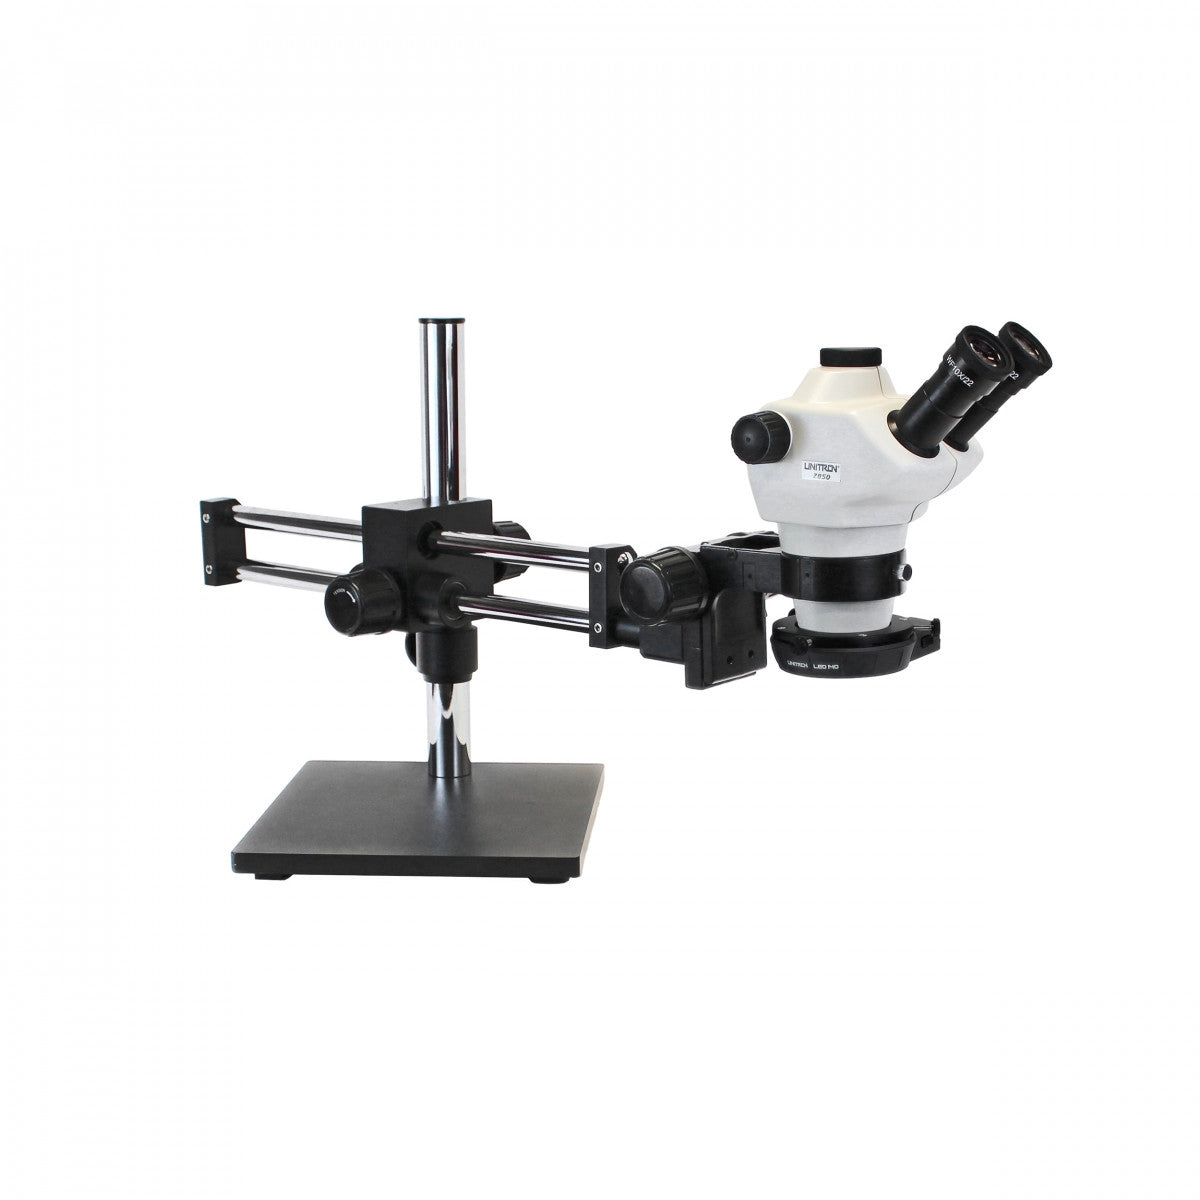 Unitron Z850 Zoom Stereo Microscope, Binocular, Ball Bearing Boom Stand, 0.5x Aux Objective, LED140 Ring Light